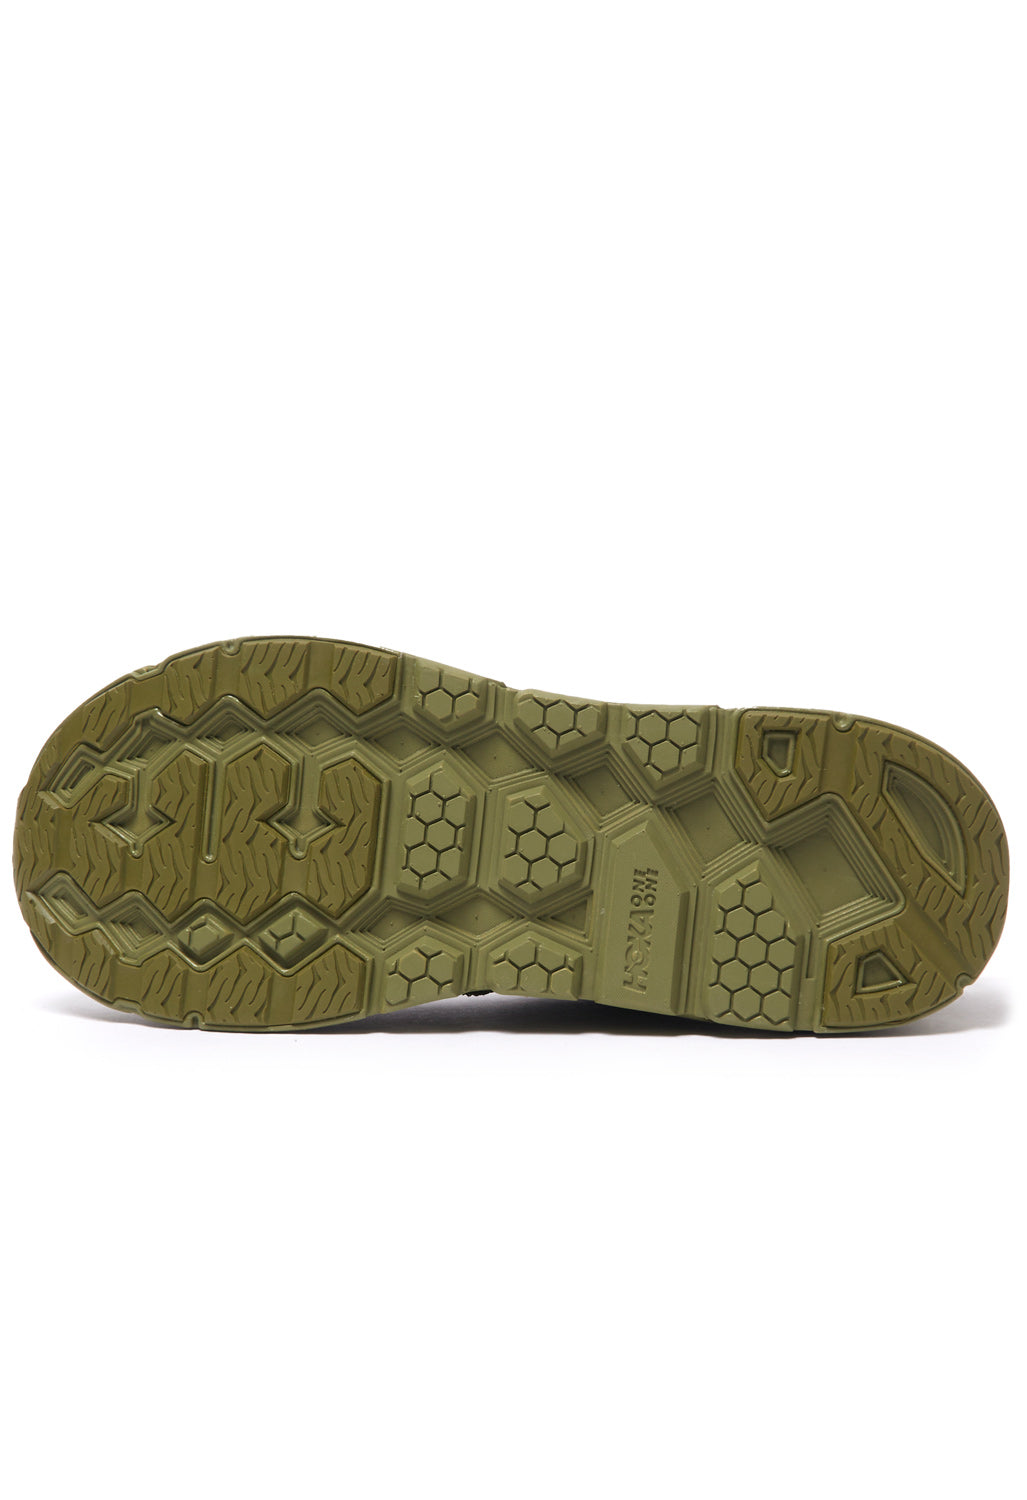 Hoka Clifton L GORE-TEX Shoes - Avocado/Green Moss